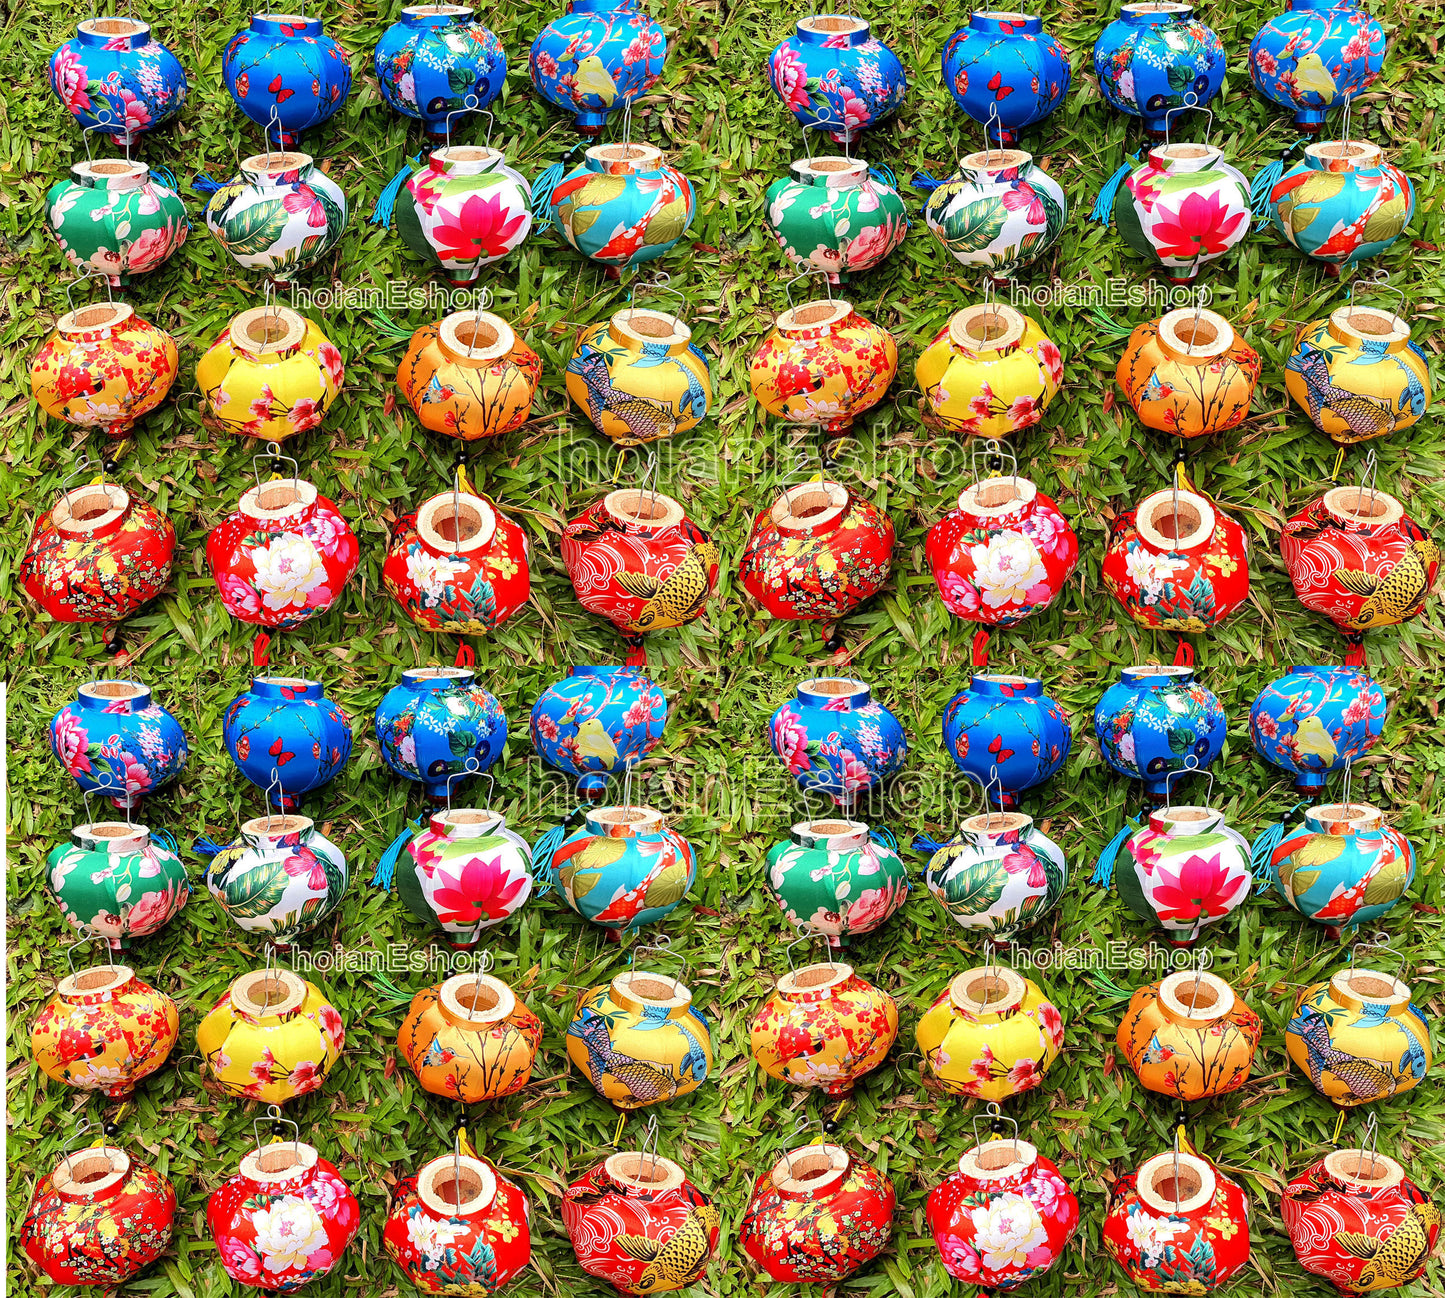 Set 100 pcs Vietnam Silk Lanterns 10cm for Moon festival, Christmas decorations Mini lanterns decorate the outdoor garden